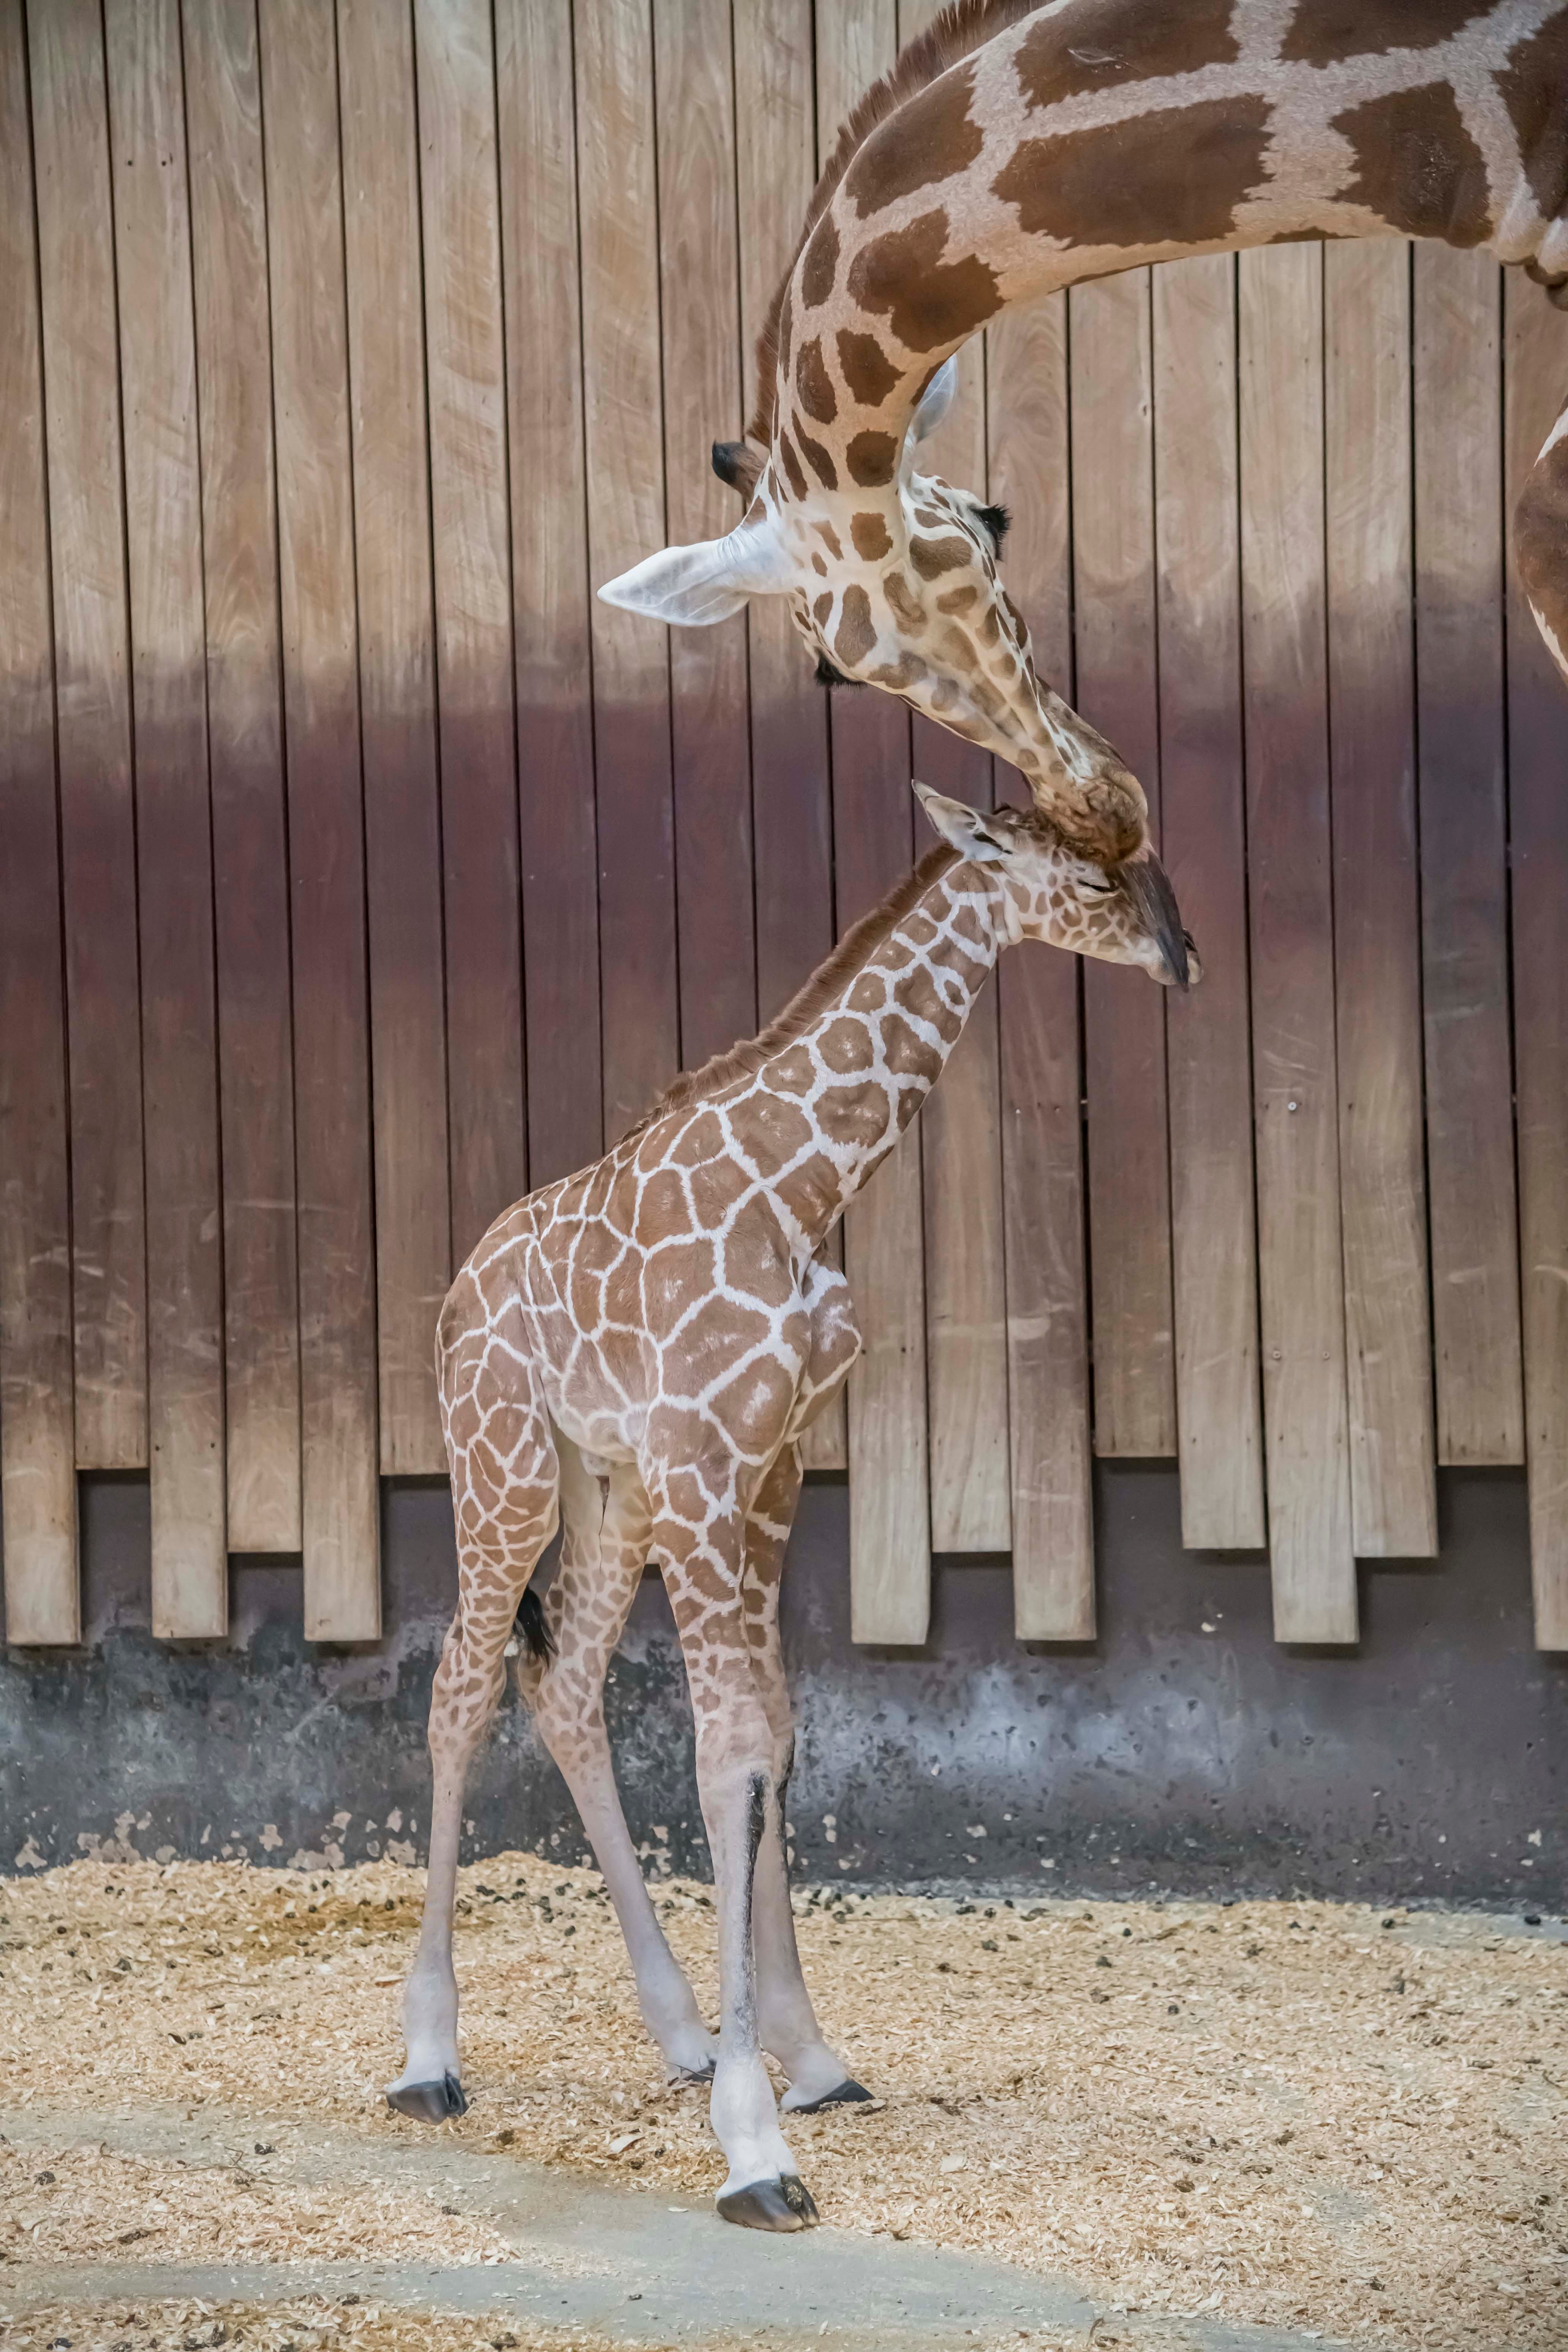 Milwaukee County Zoo welcomes baby giraffe to mom Marlee, dad Bahatika